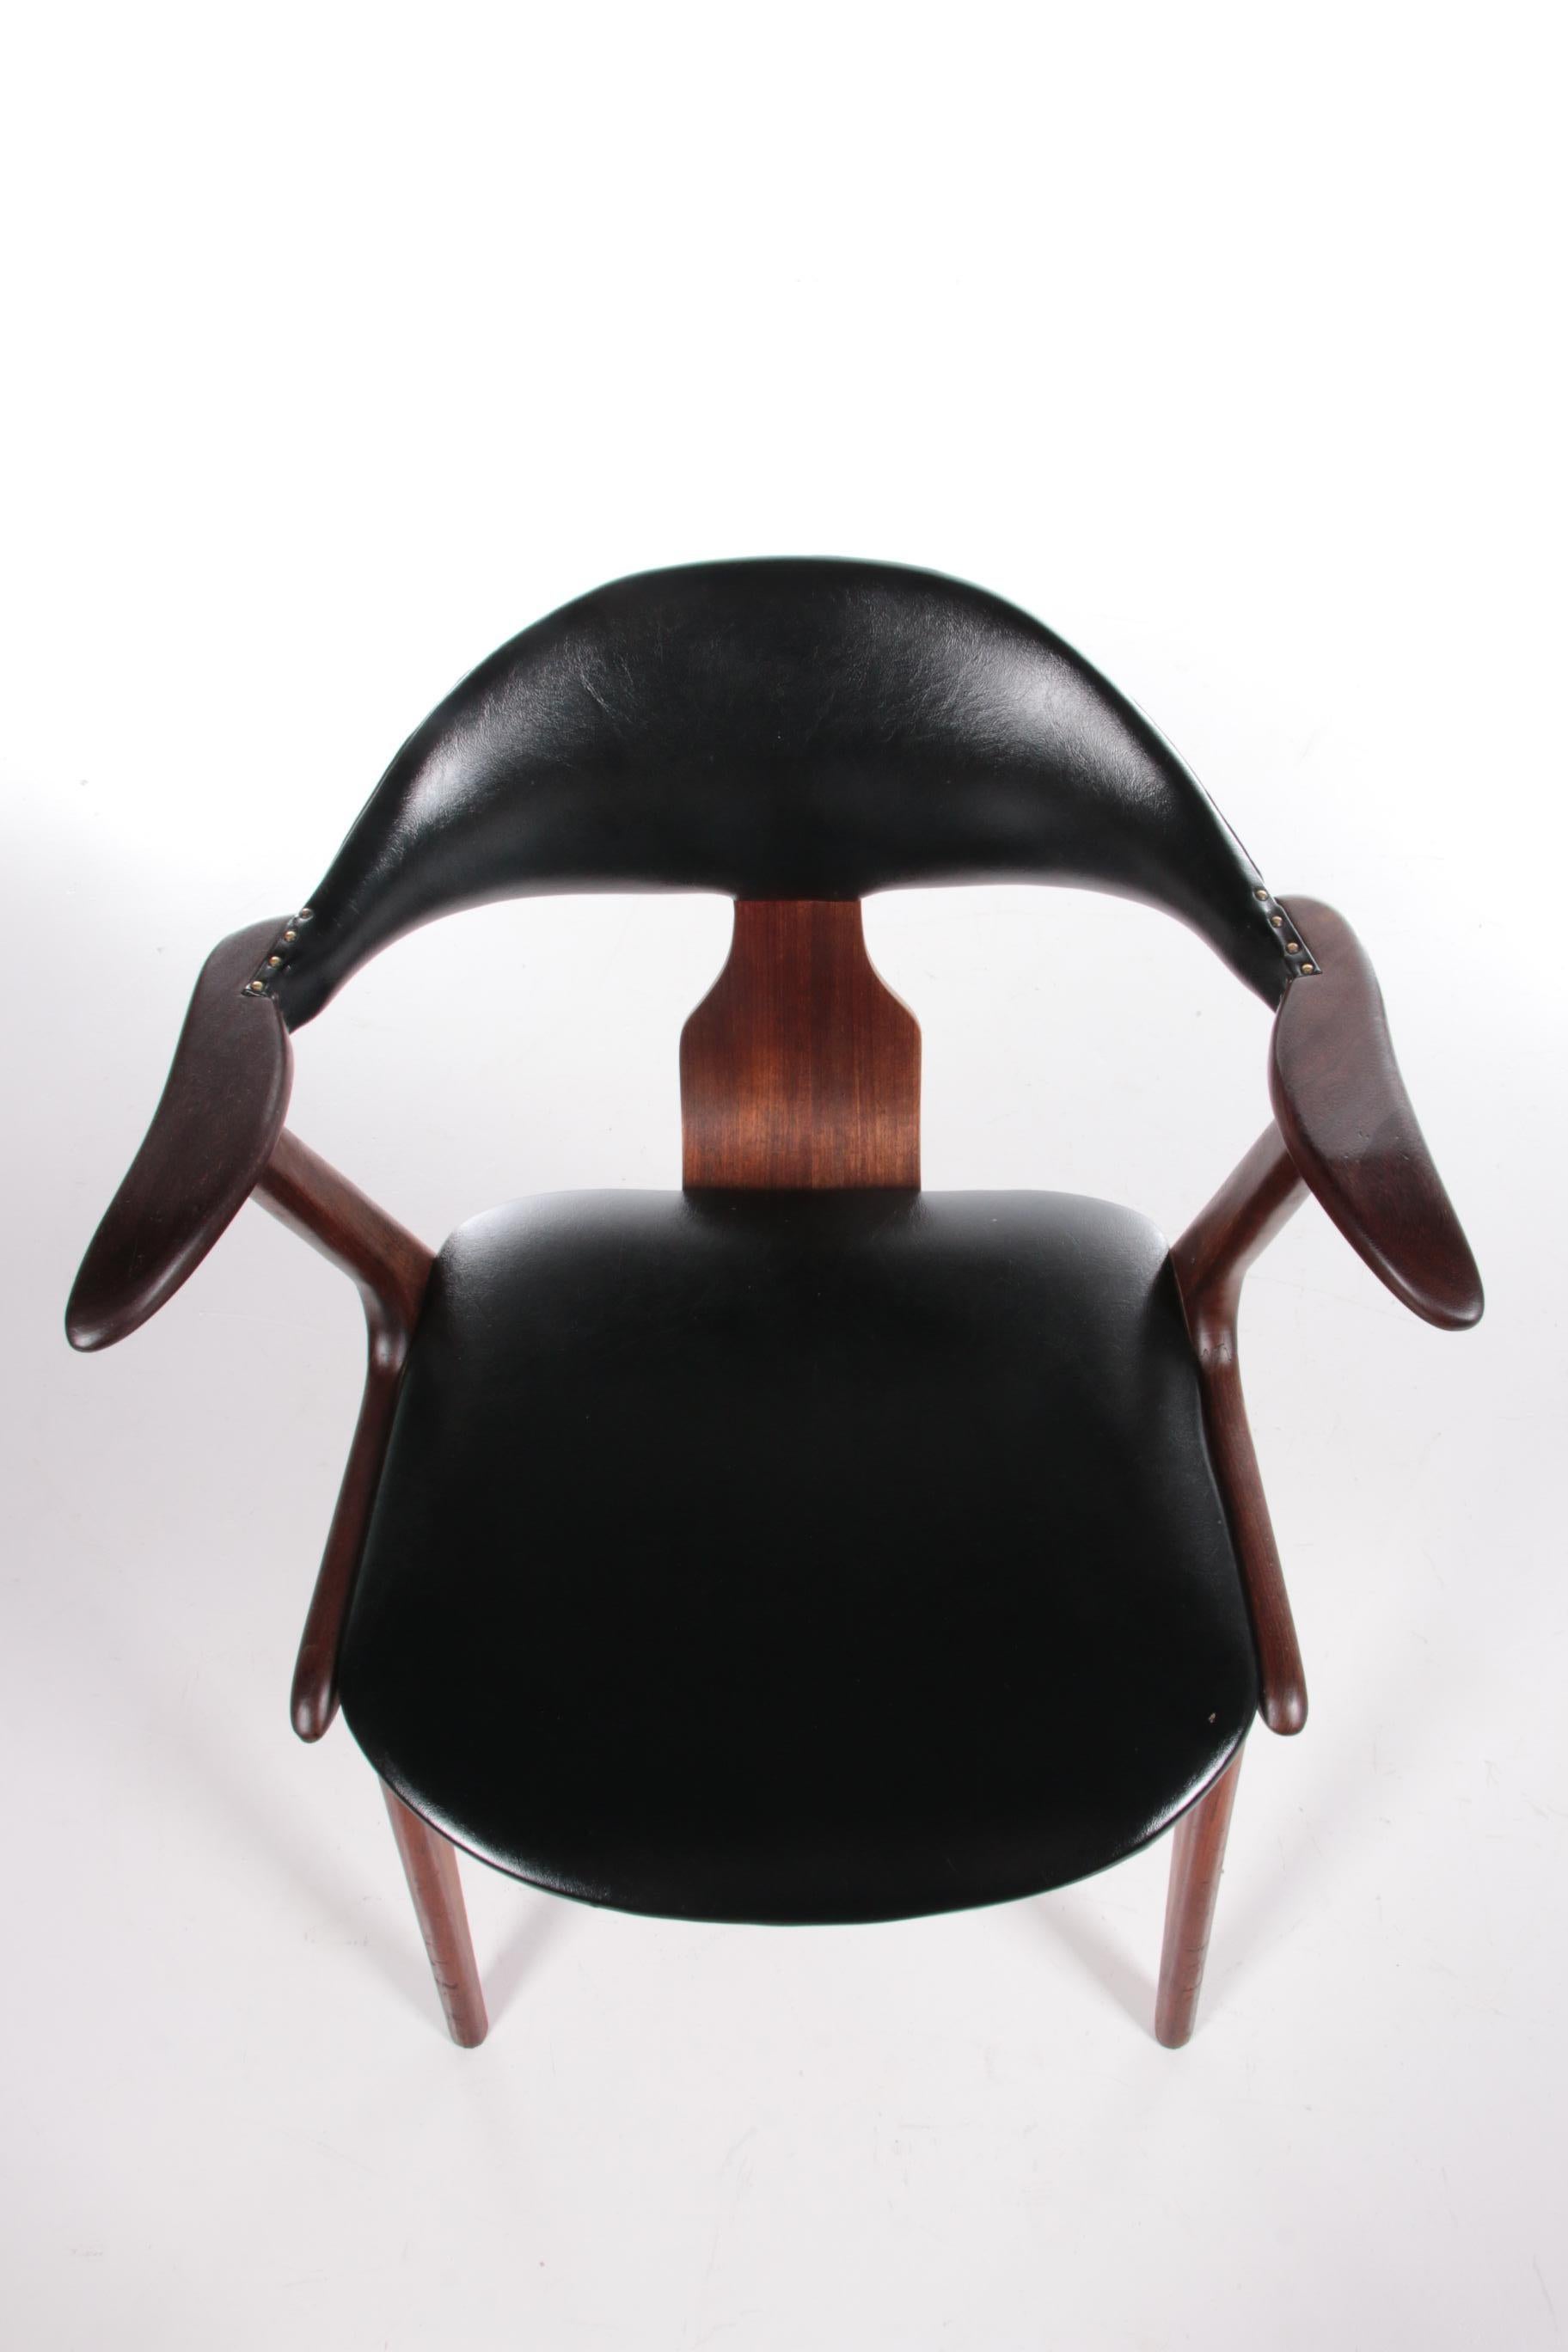 Leather Louis Van Teeffelen Cow Horn Chair Wébé